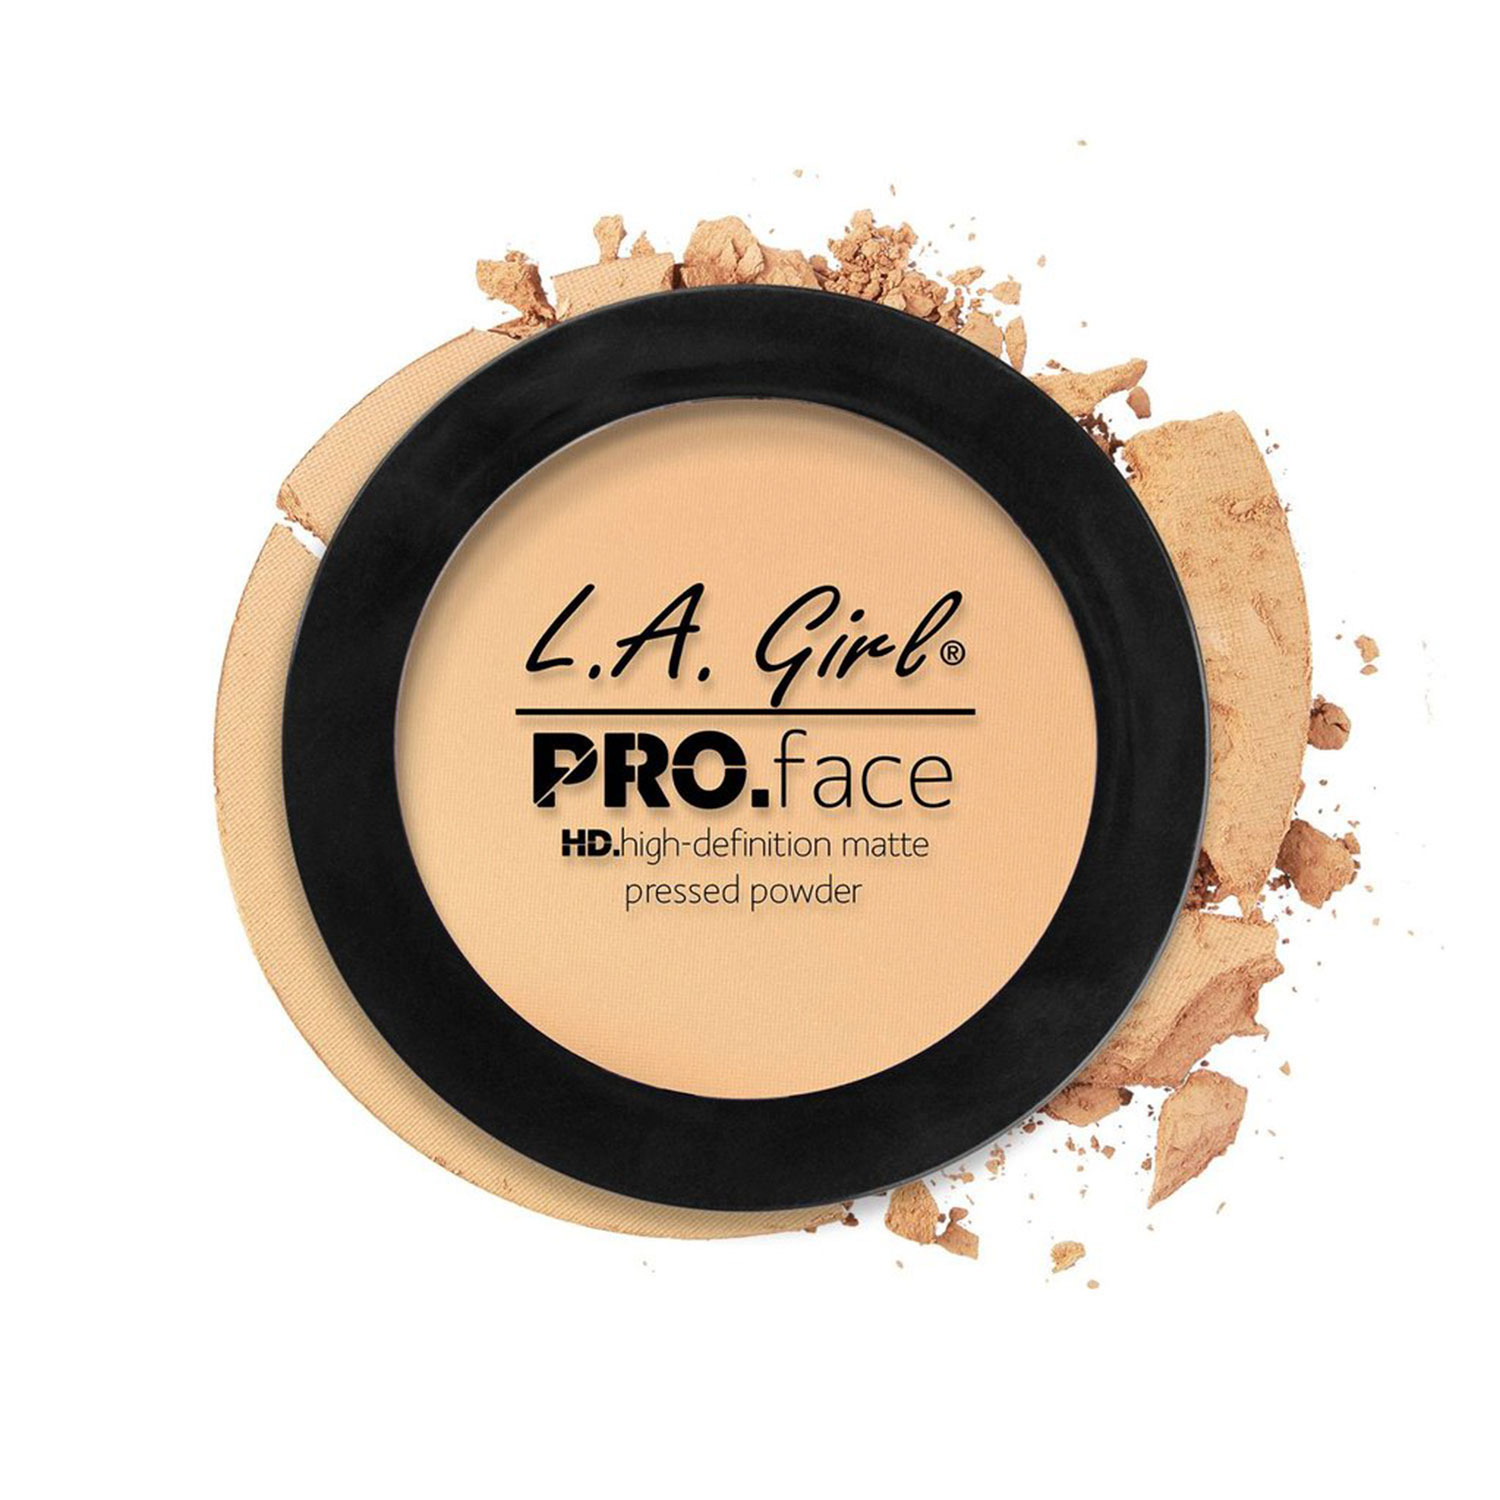 L.A. Girl HD Pro Face Pressed Powder, 7gm-Creamy Natural